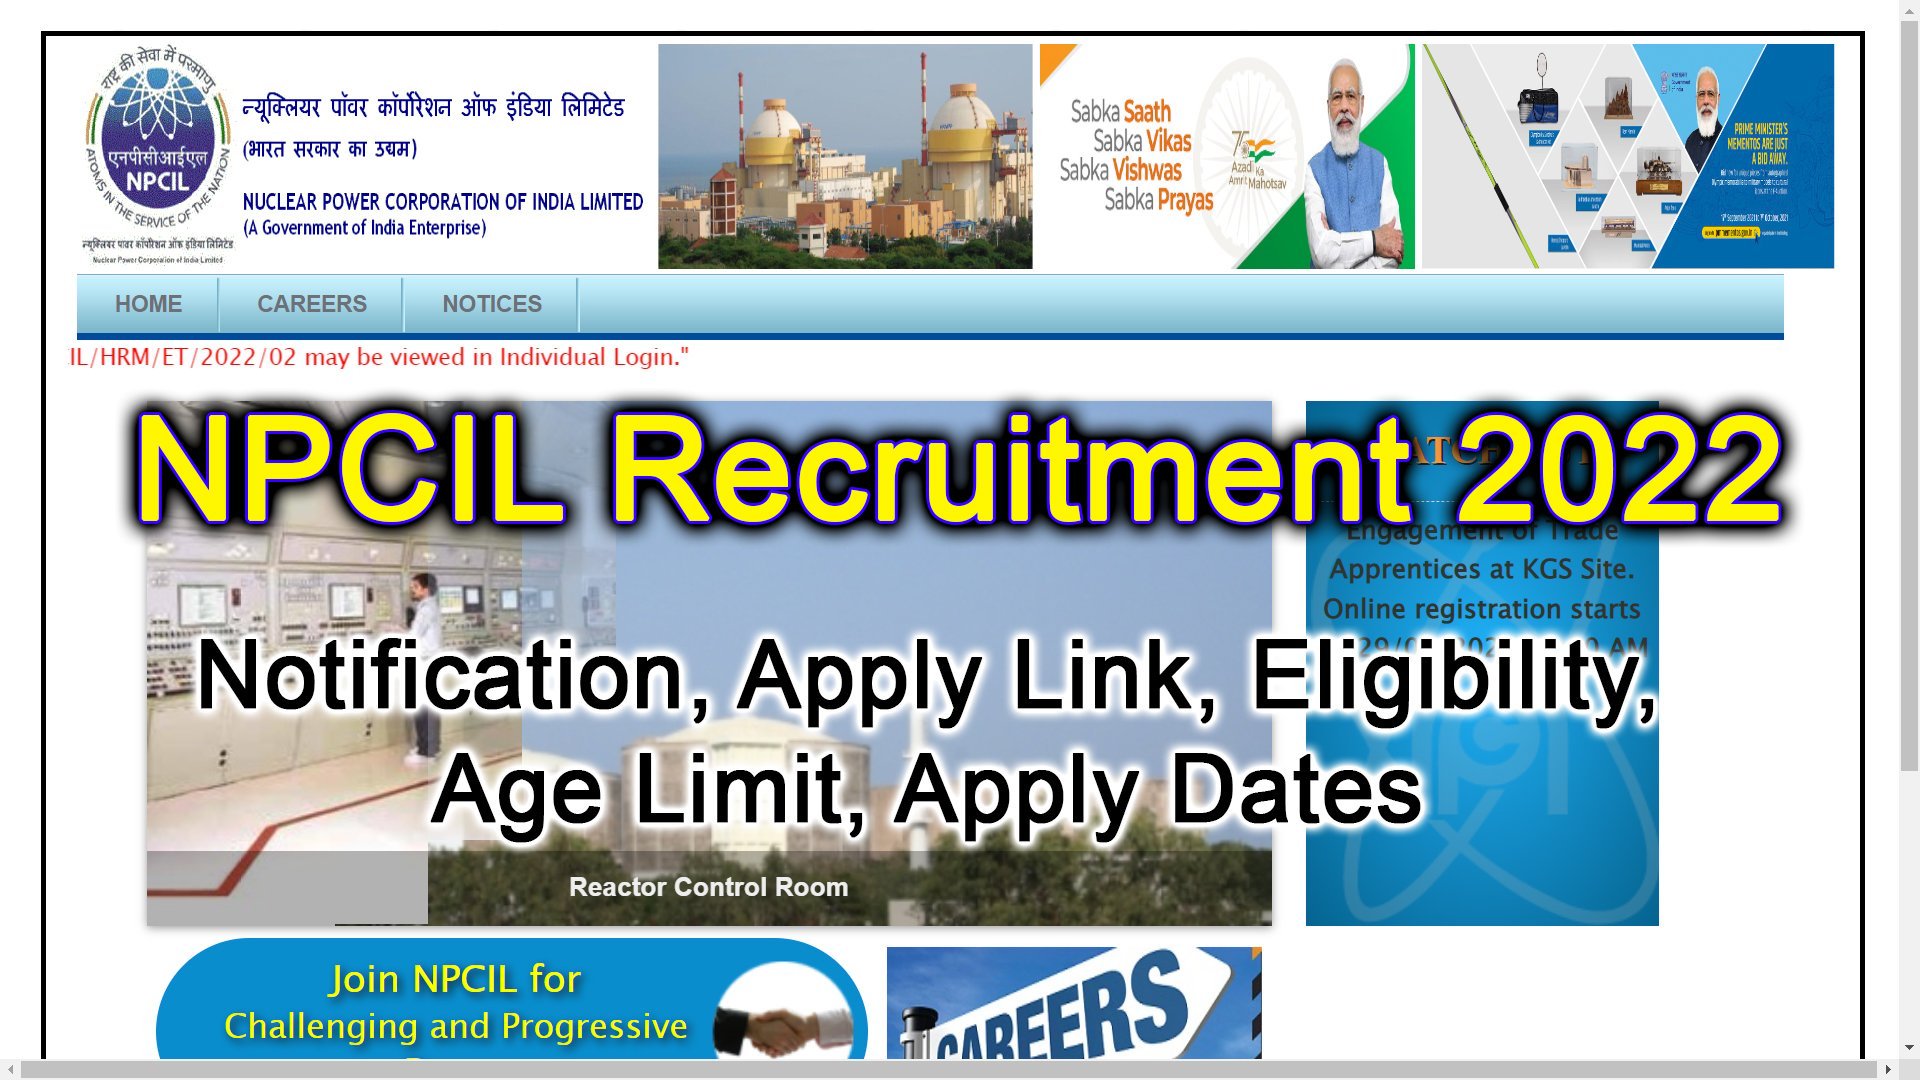 NPCIL Recruitment 2022 - Notification and Apply Link